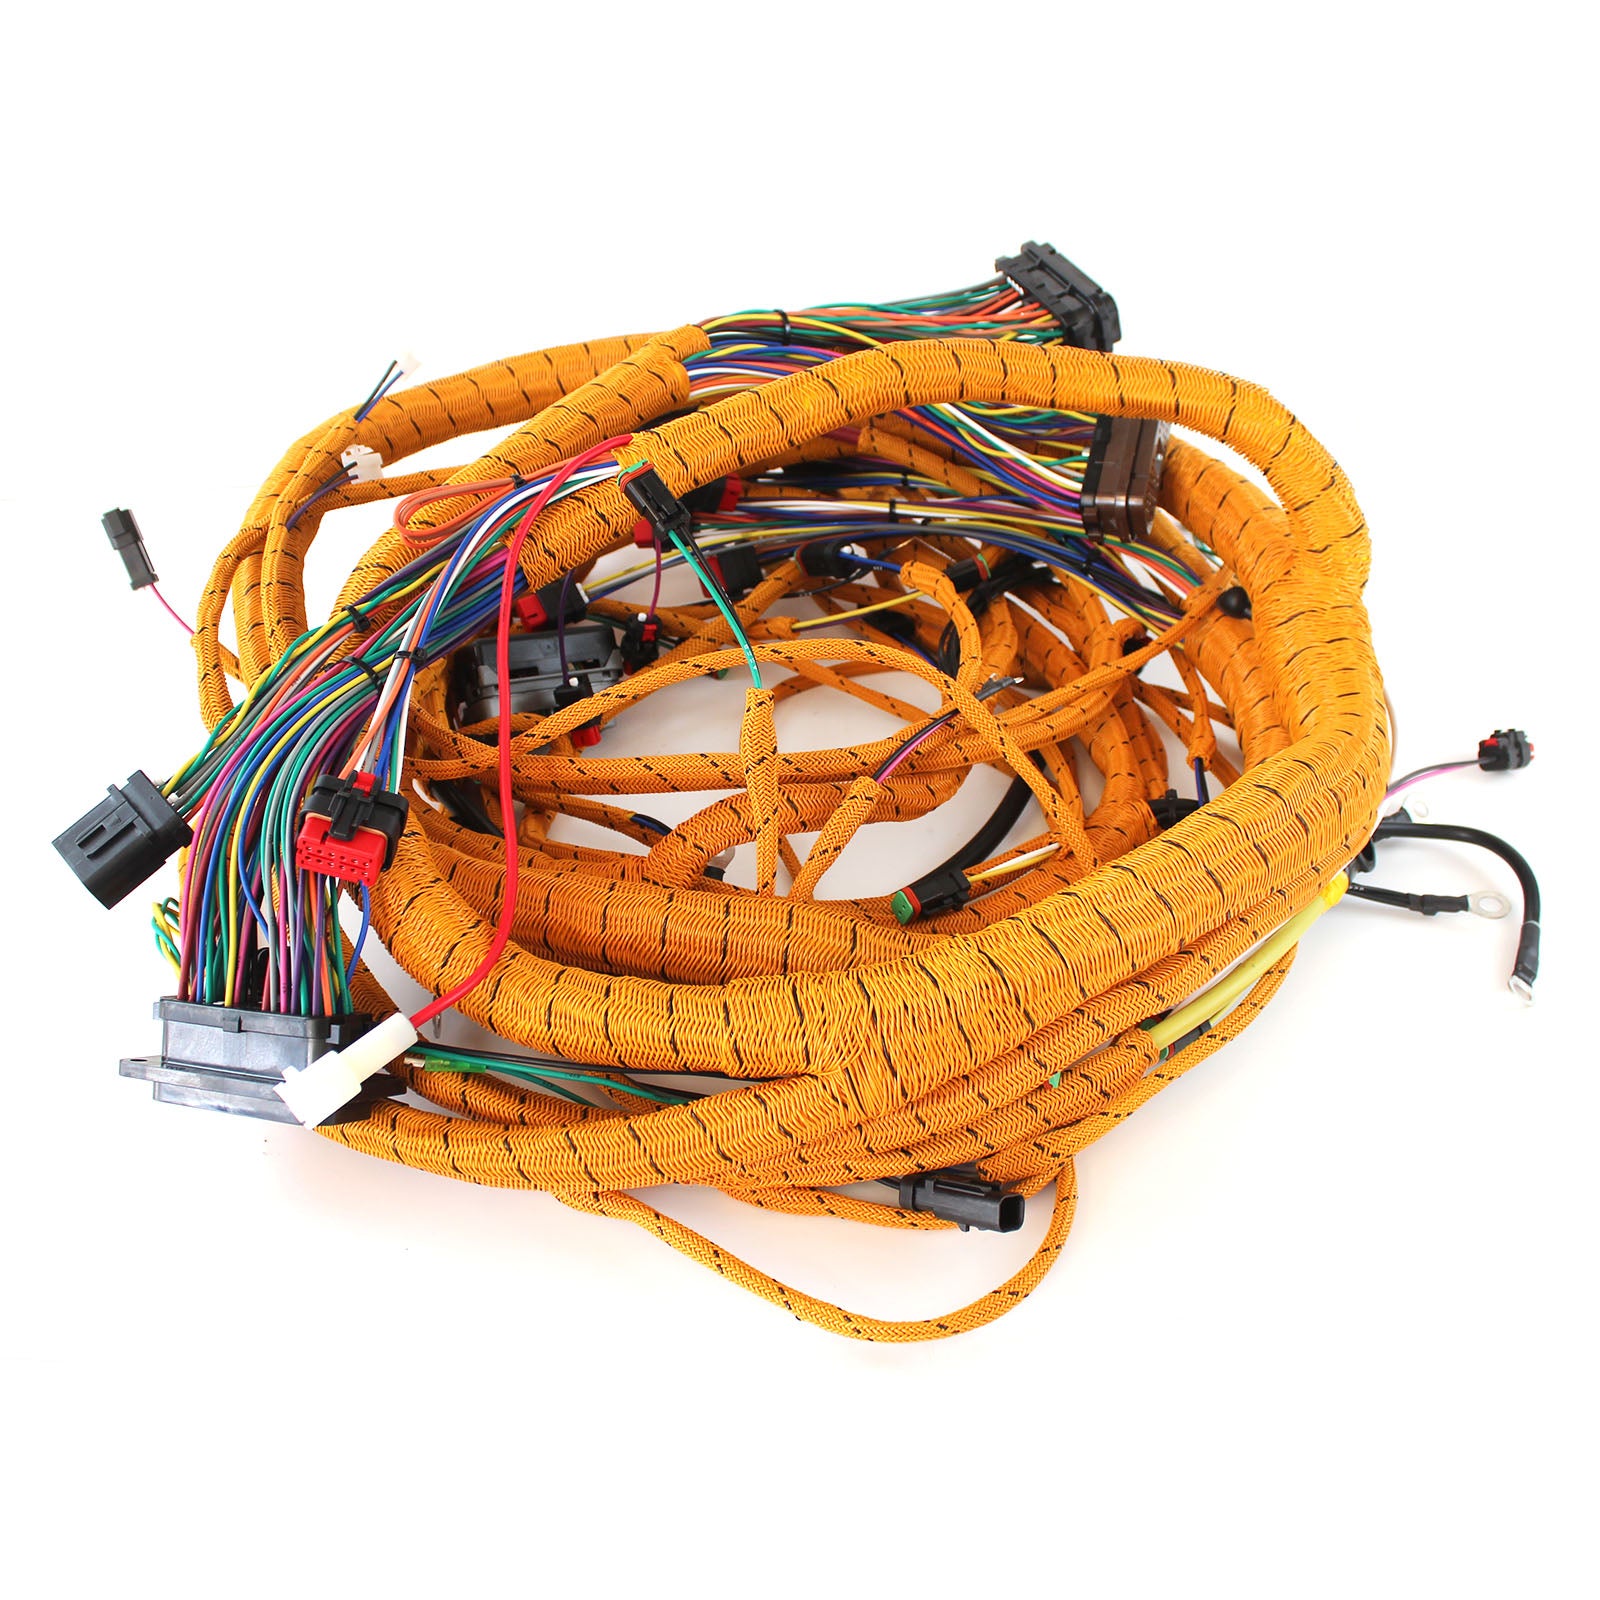 291-7590 2917590 Wire Harness for Caterpillar 320D 320DL 323D